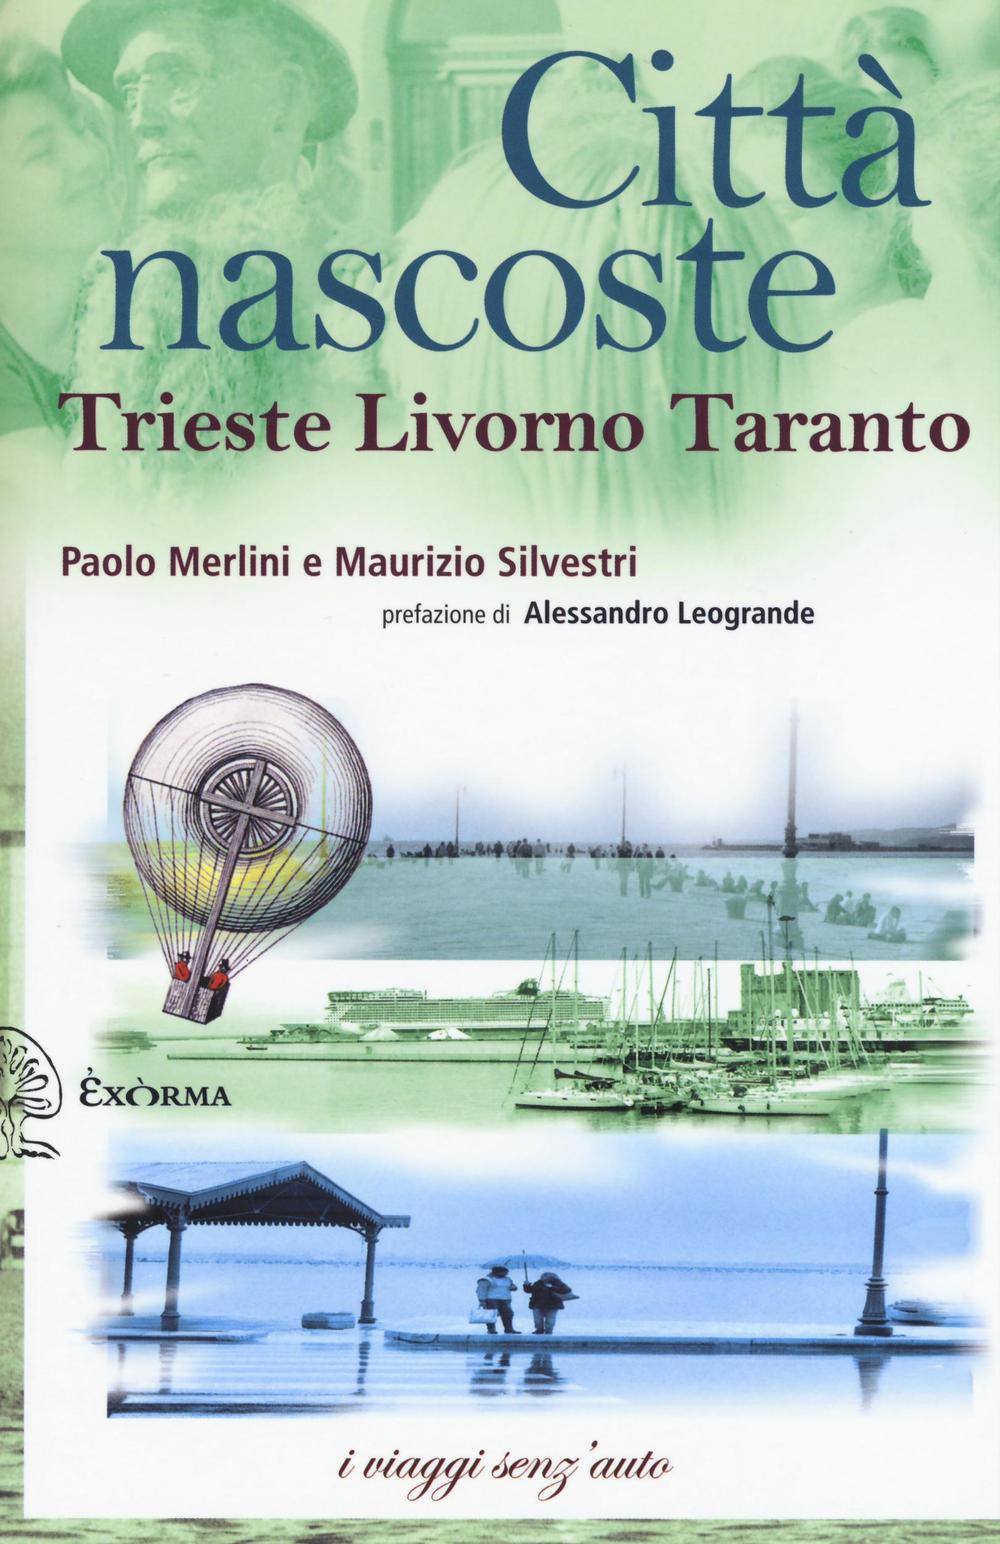 Città nascoste. Trieste Livorno Taranto